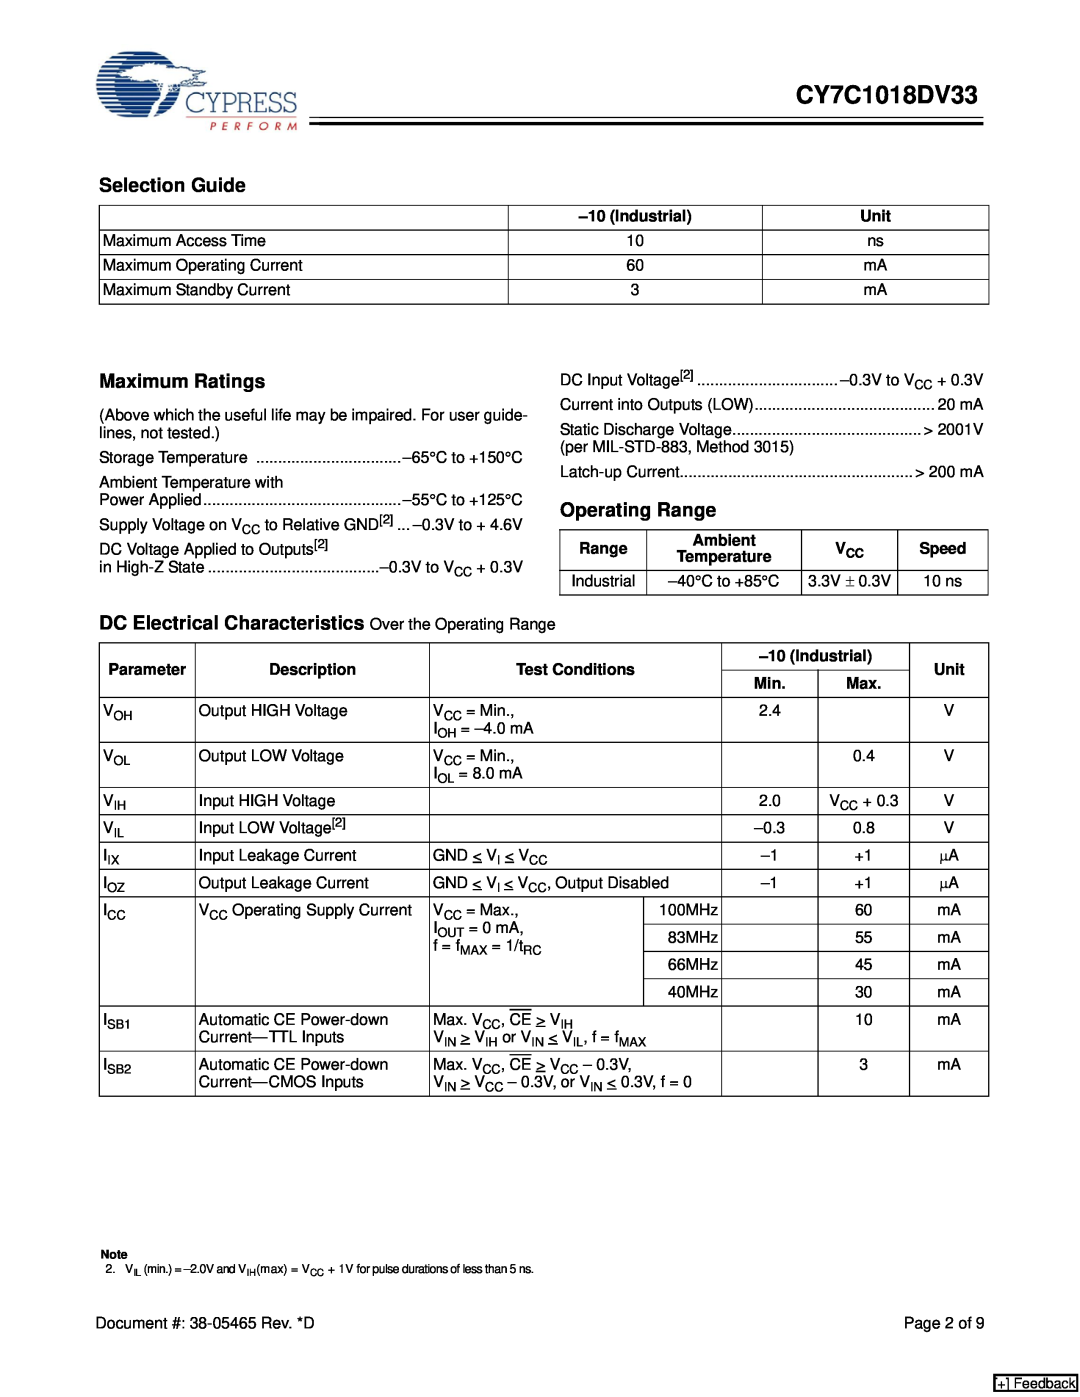 Cypress CY7C1018DV33 manual Selection Guide, Maximum Ratings, Operating Range 